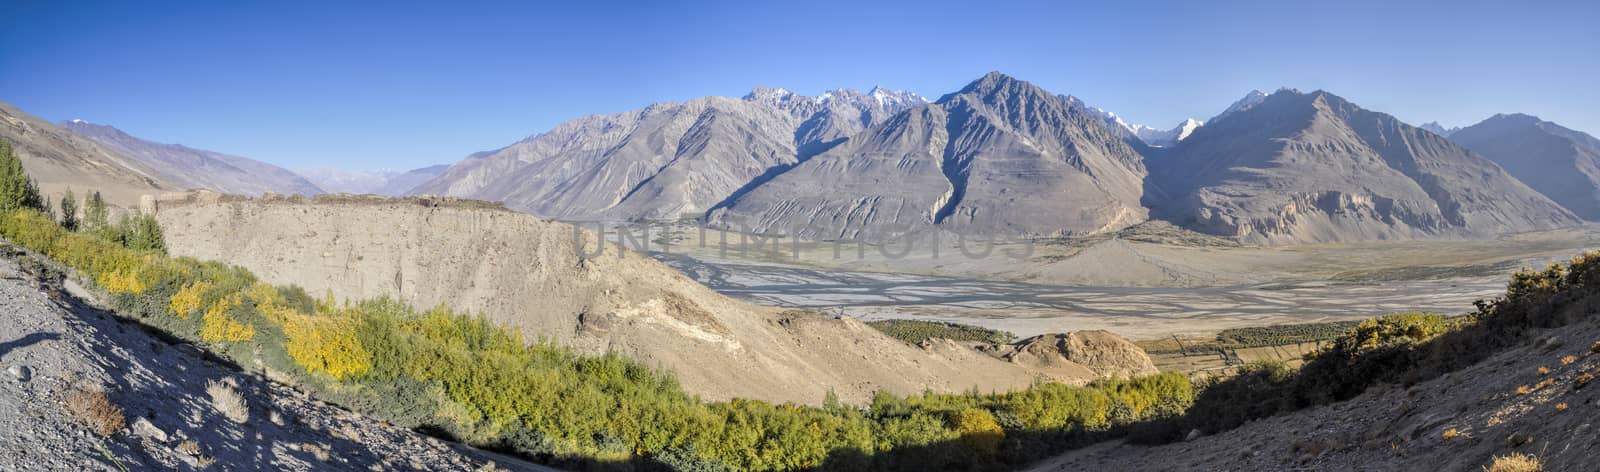 Tajikistan panorama by MichalKnitl